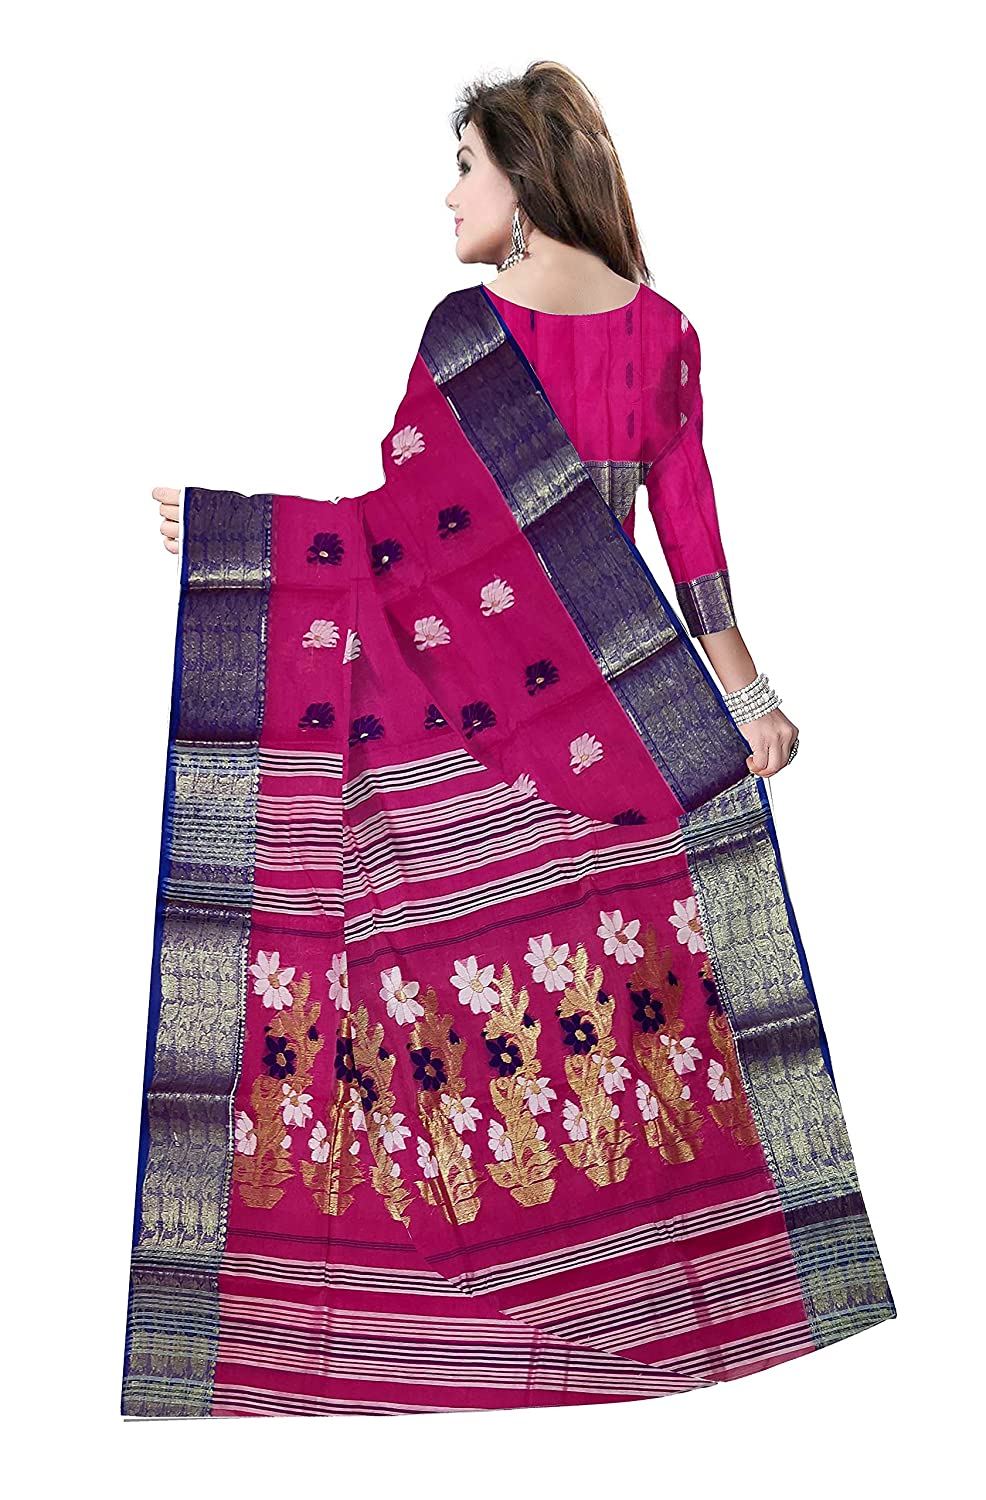 Pradip Fabrics Ethnic Women's Tant Cotton Pink Color Saree